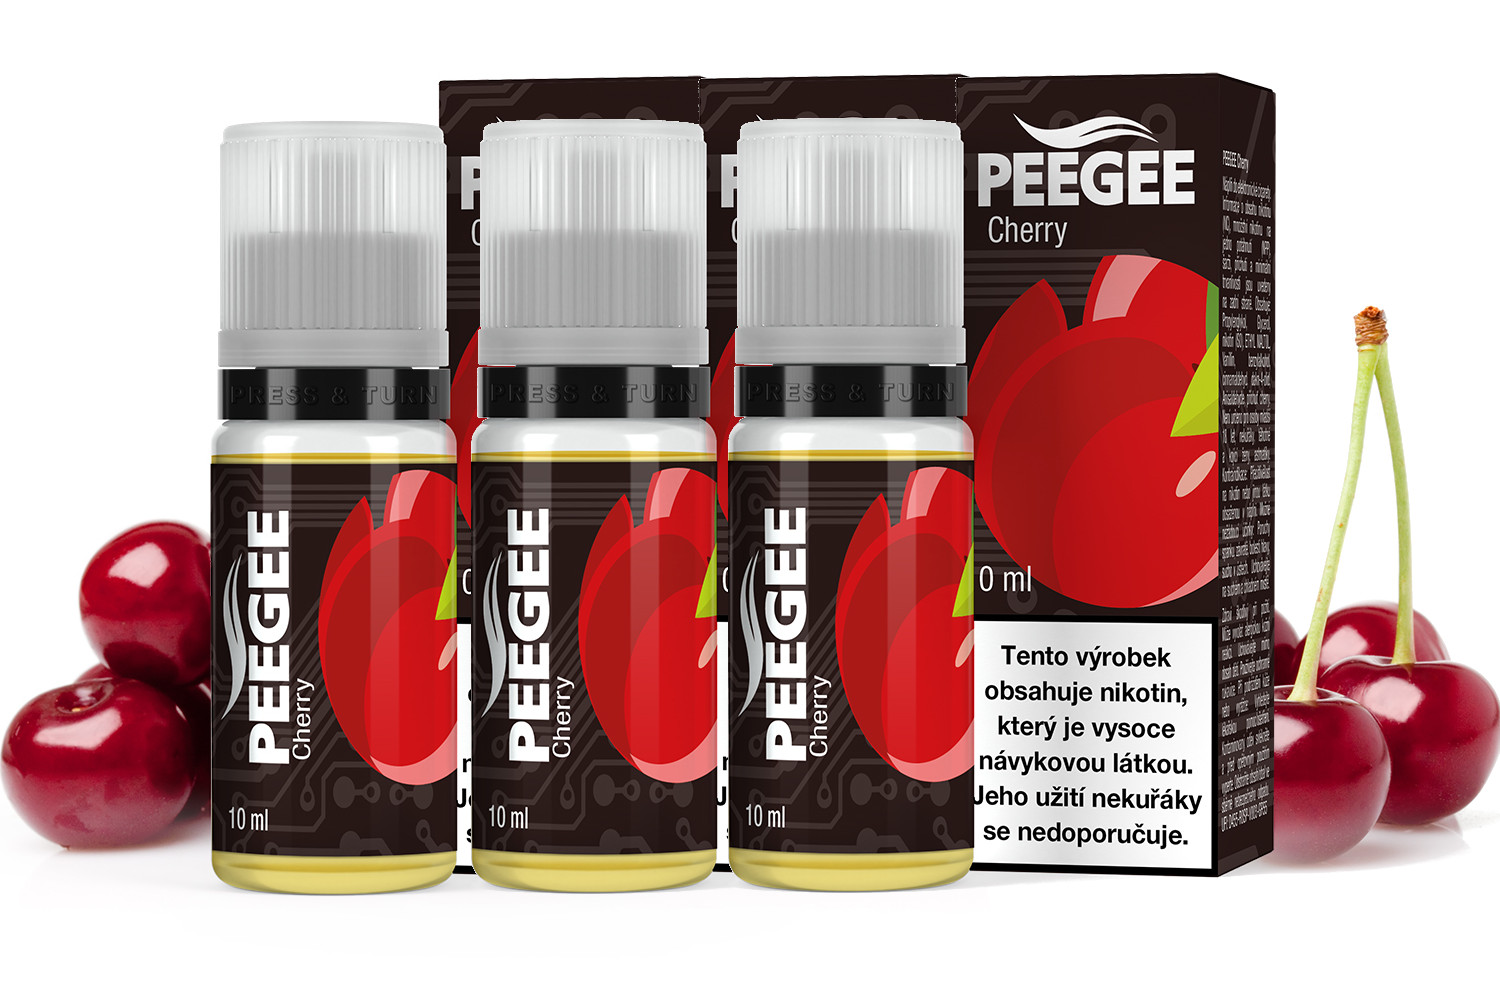 PEEGEE - Višeň (Cherry) 3x10ml Obsah nikotinu: 6mg